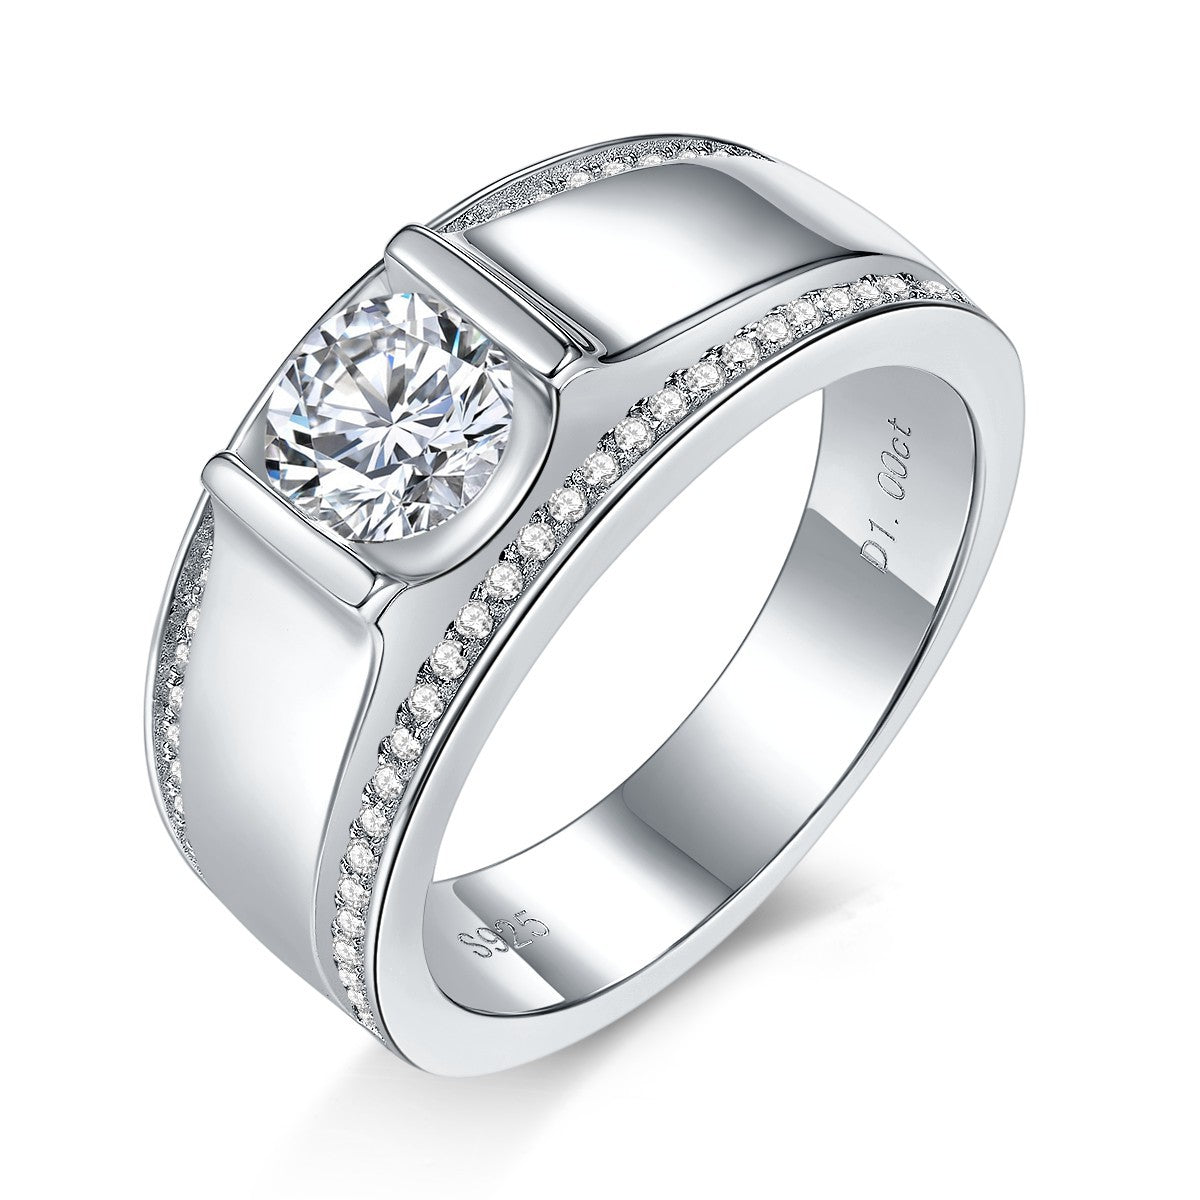 2 carat heroic men's wedding pair rings, moissanite couple gift silver plated 18K gold ring